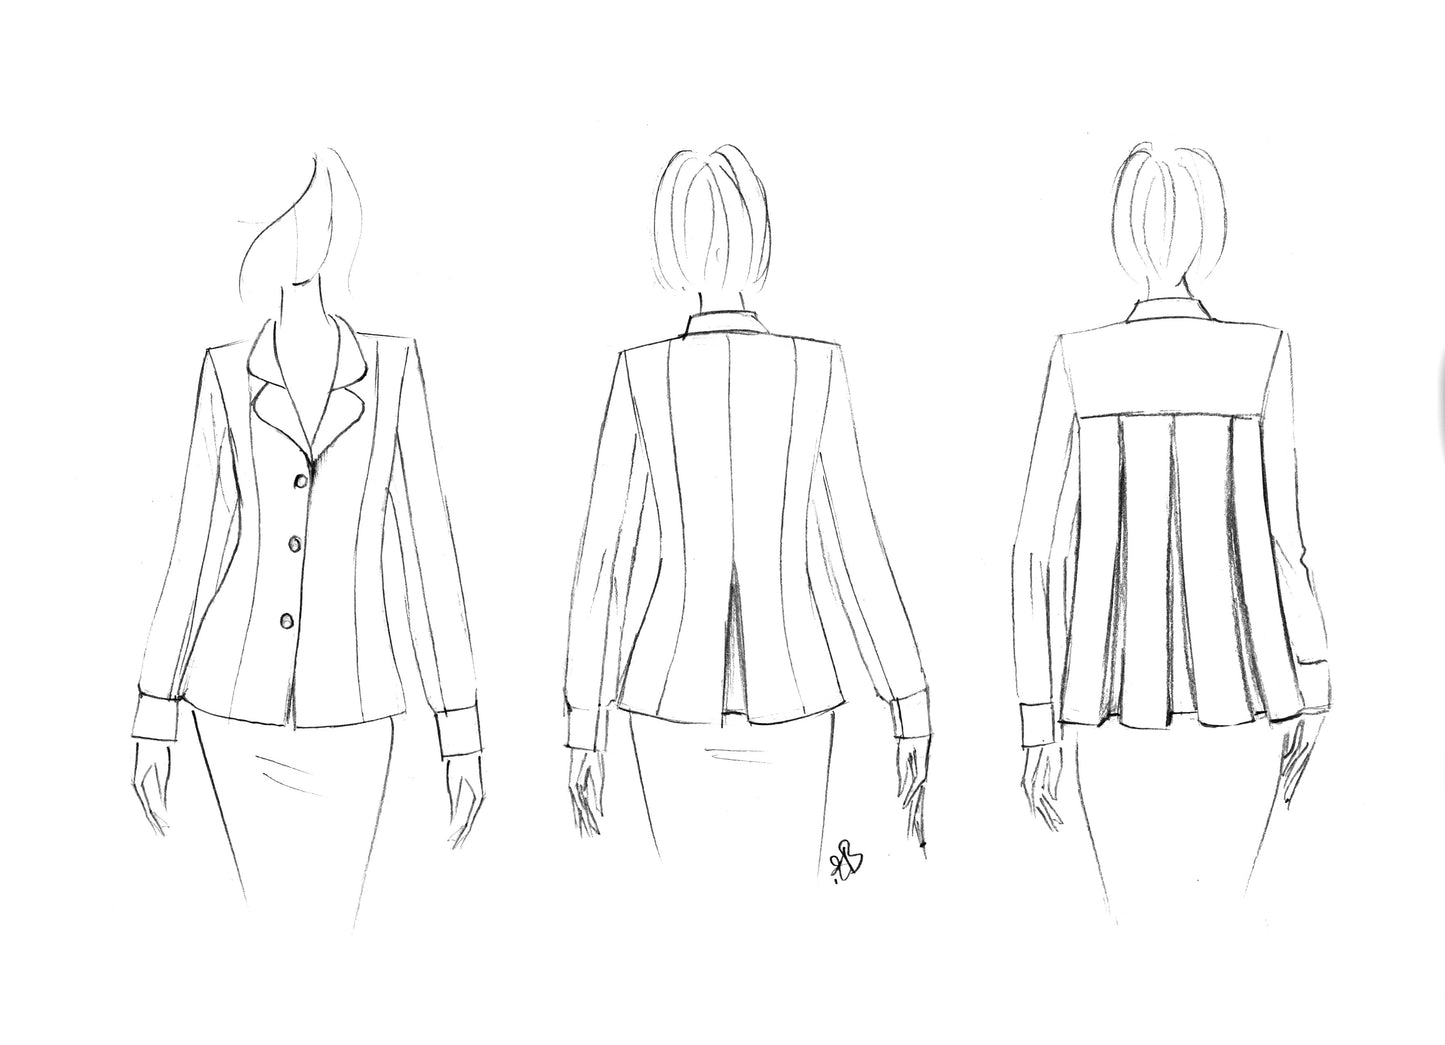 Pleat Back Shirt Jacket Pattern - HARD COPY OR DIGITAL DOWNLOAD